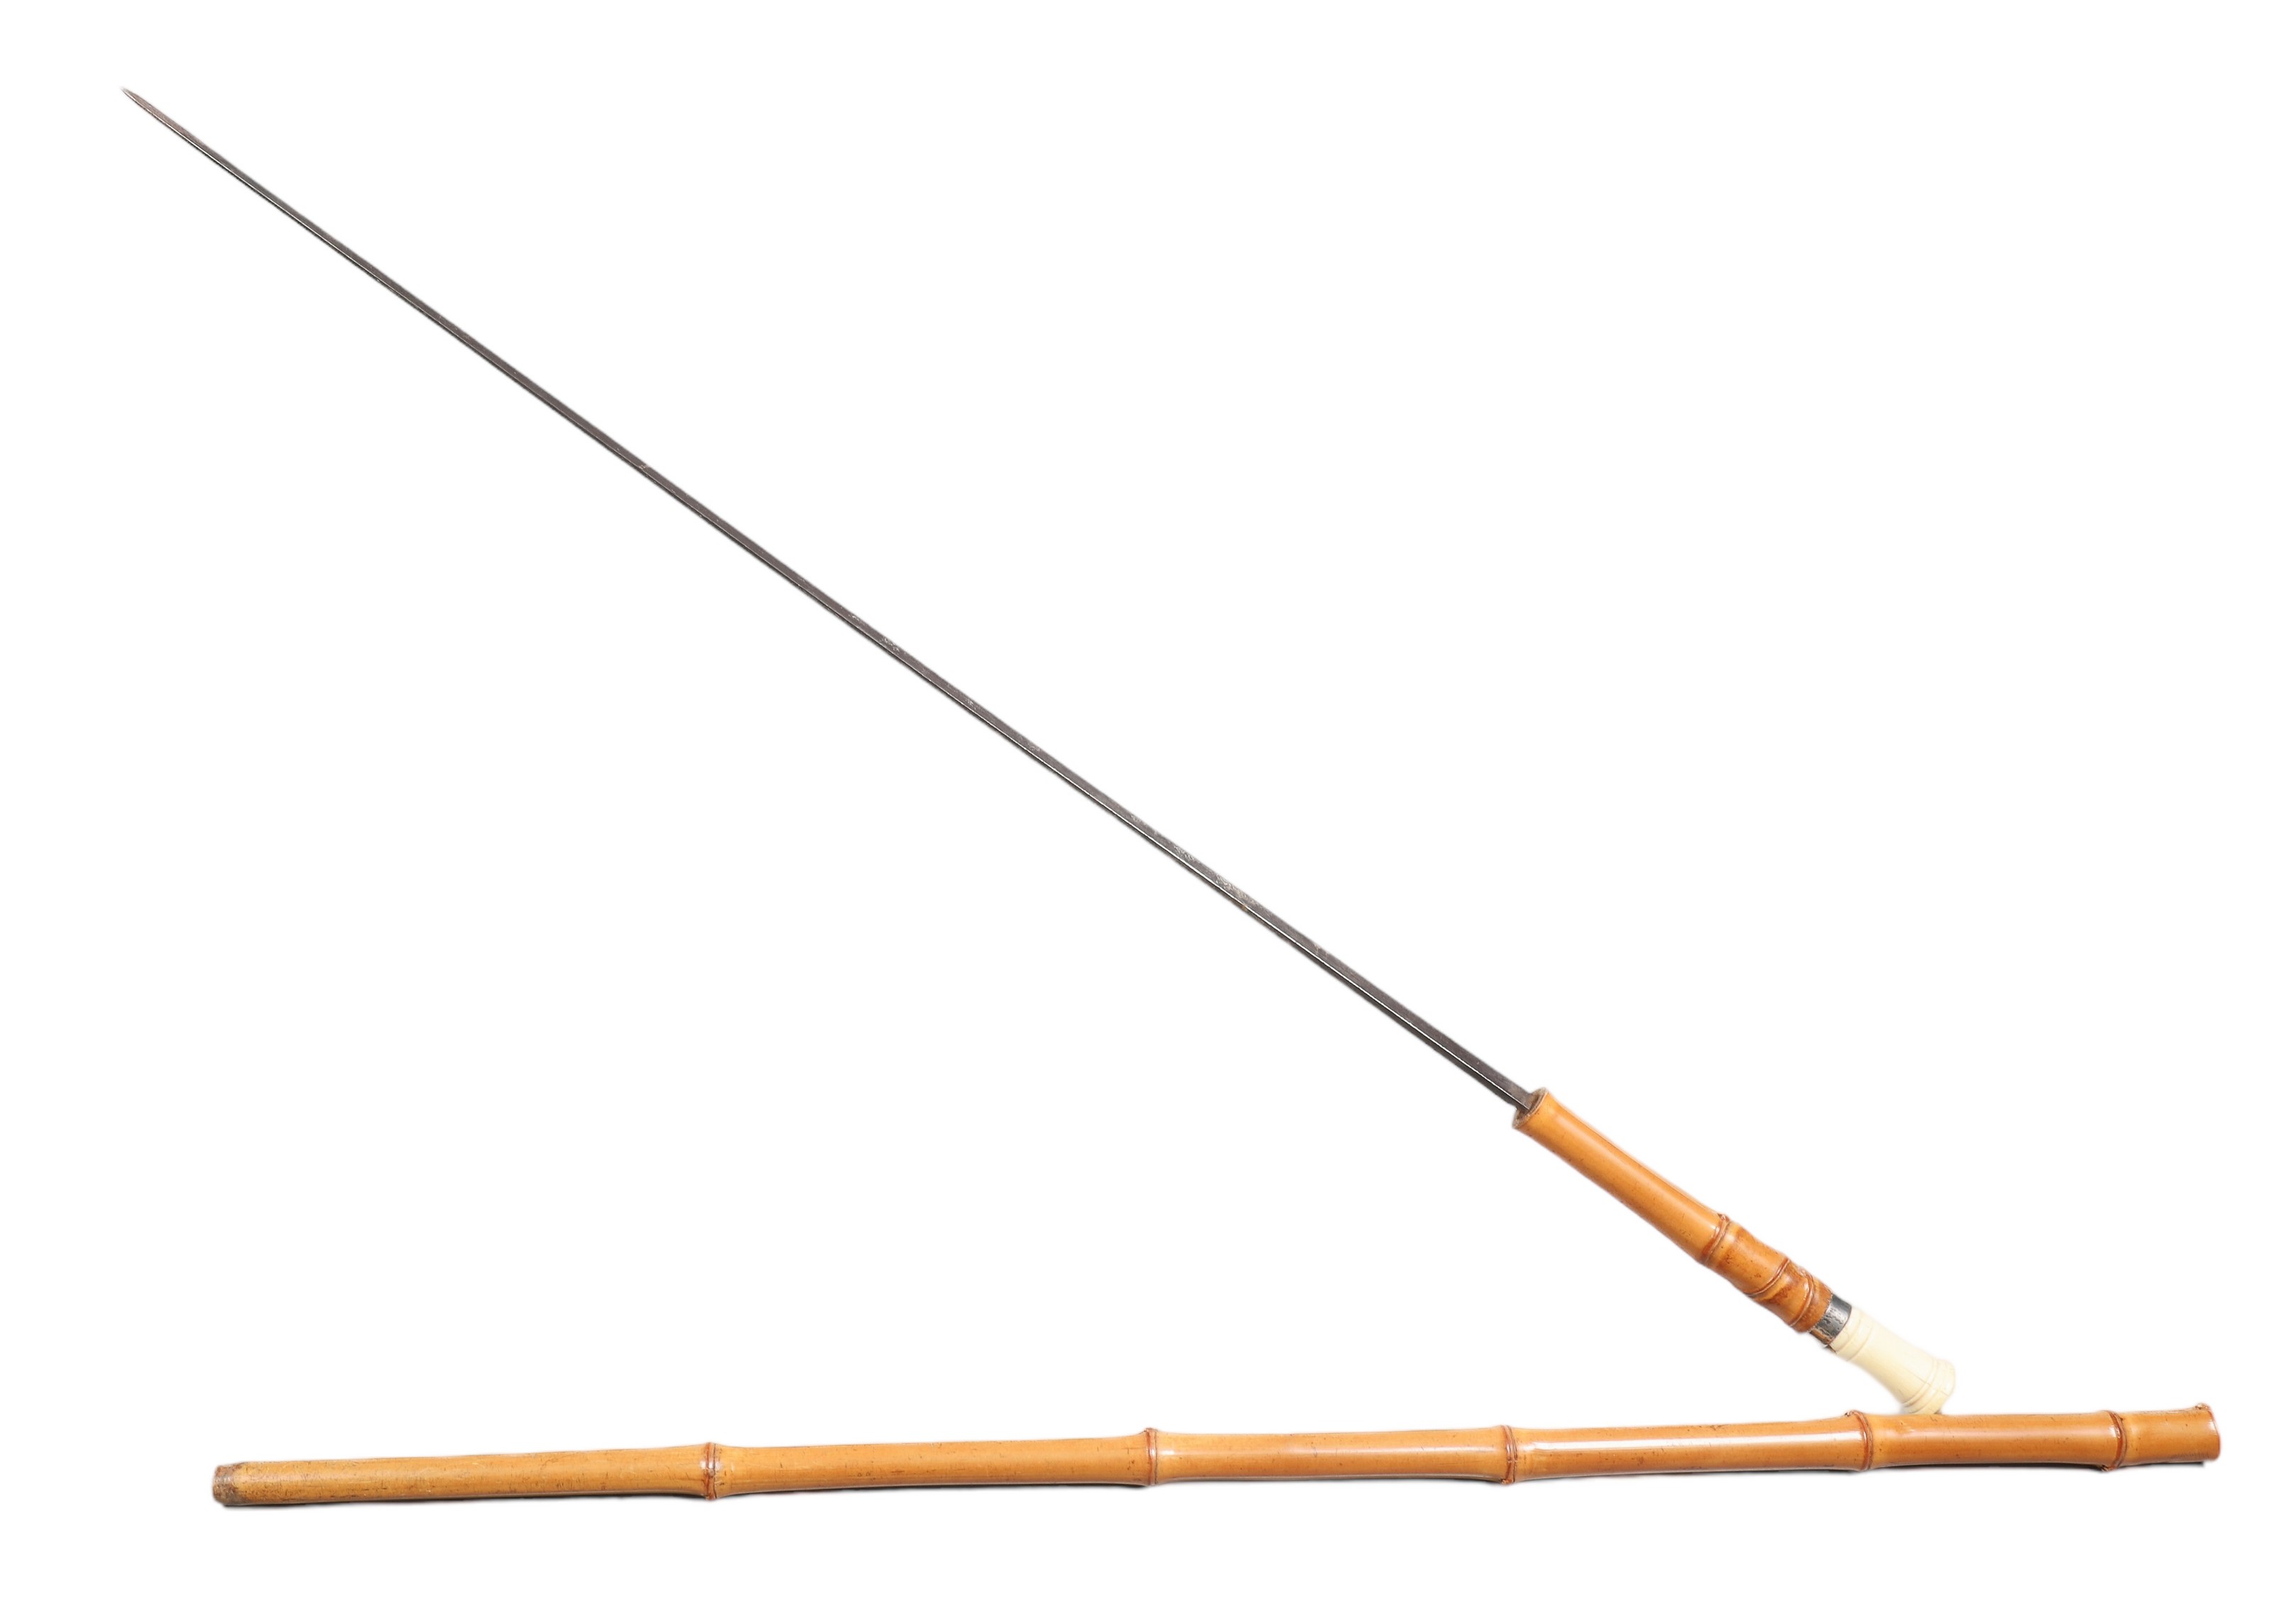 Bamboo sword cane walking stick, blade